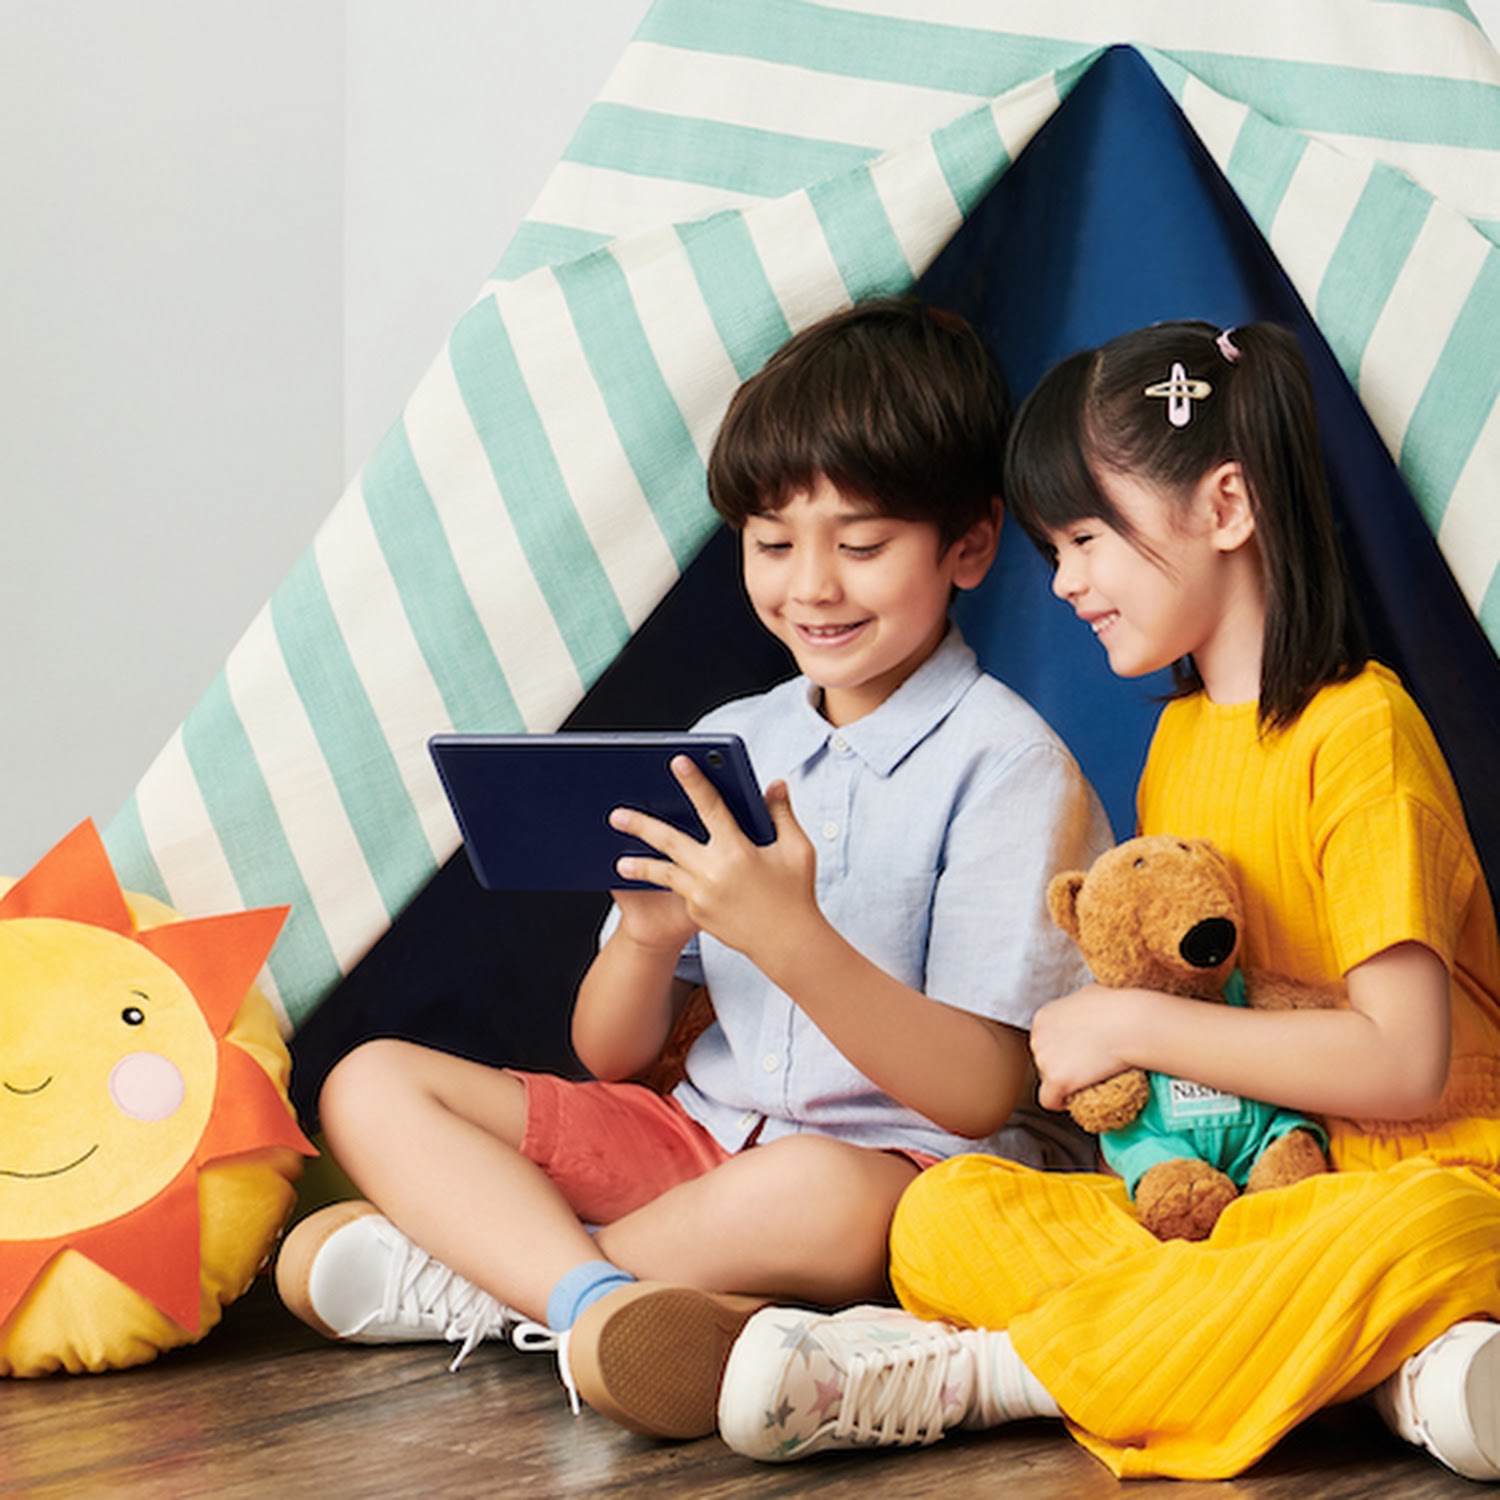 Huawei brinda una experiencia de aprendizaje online segura